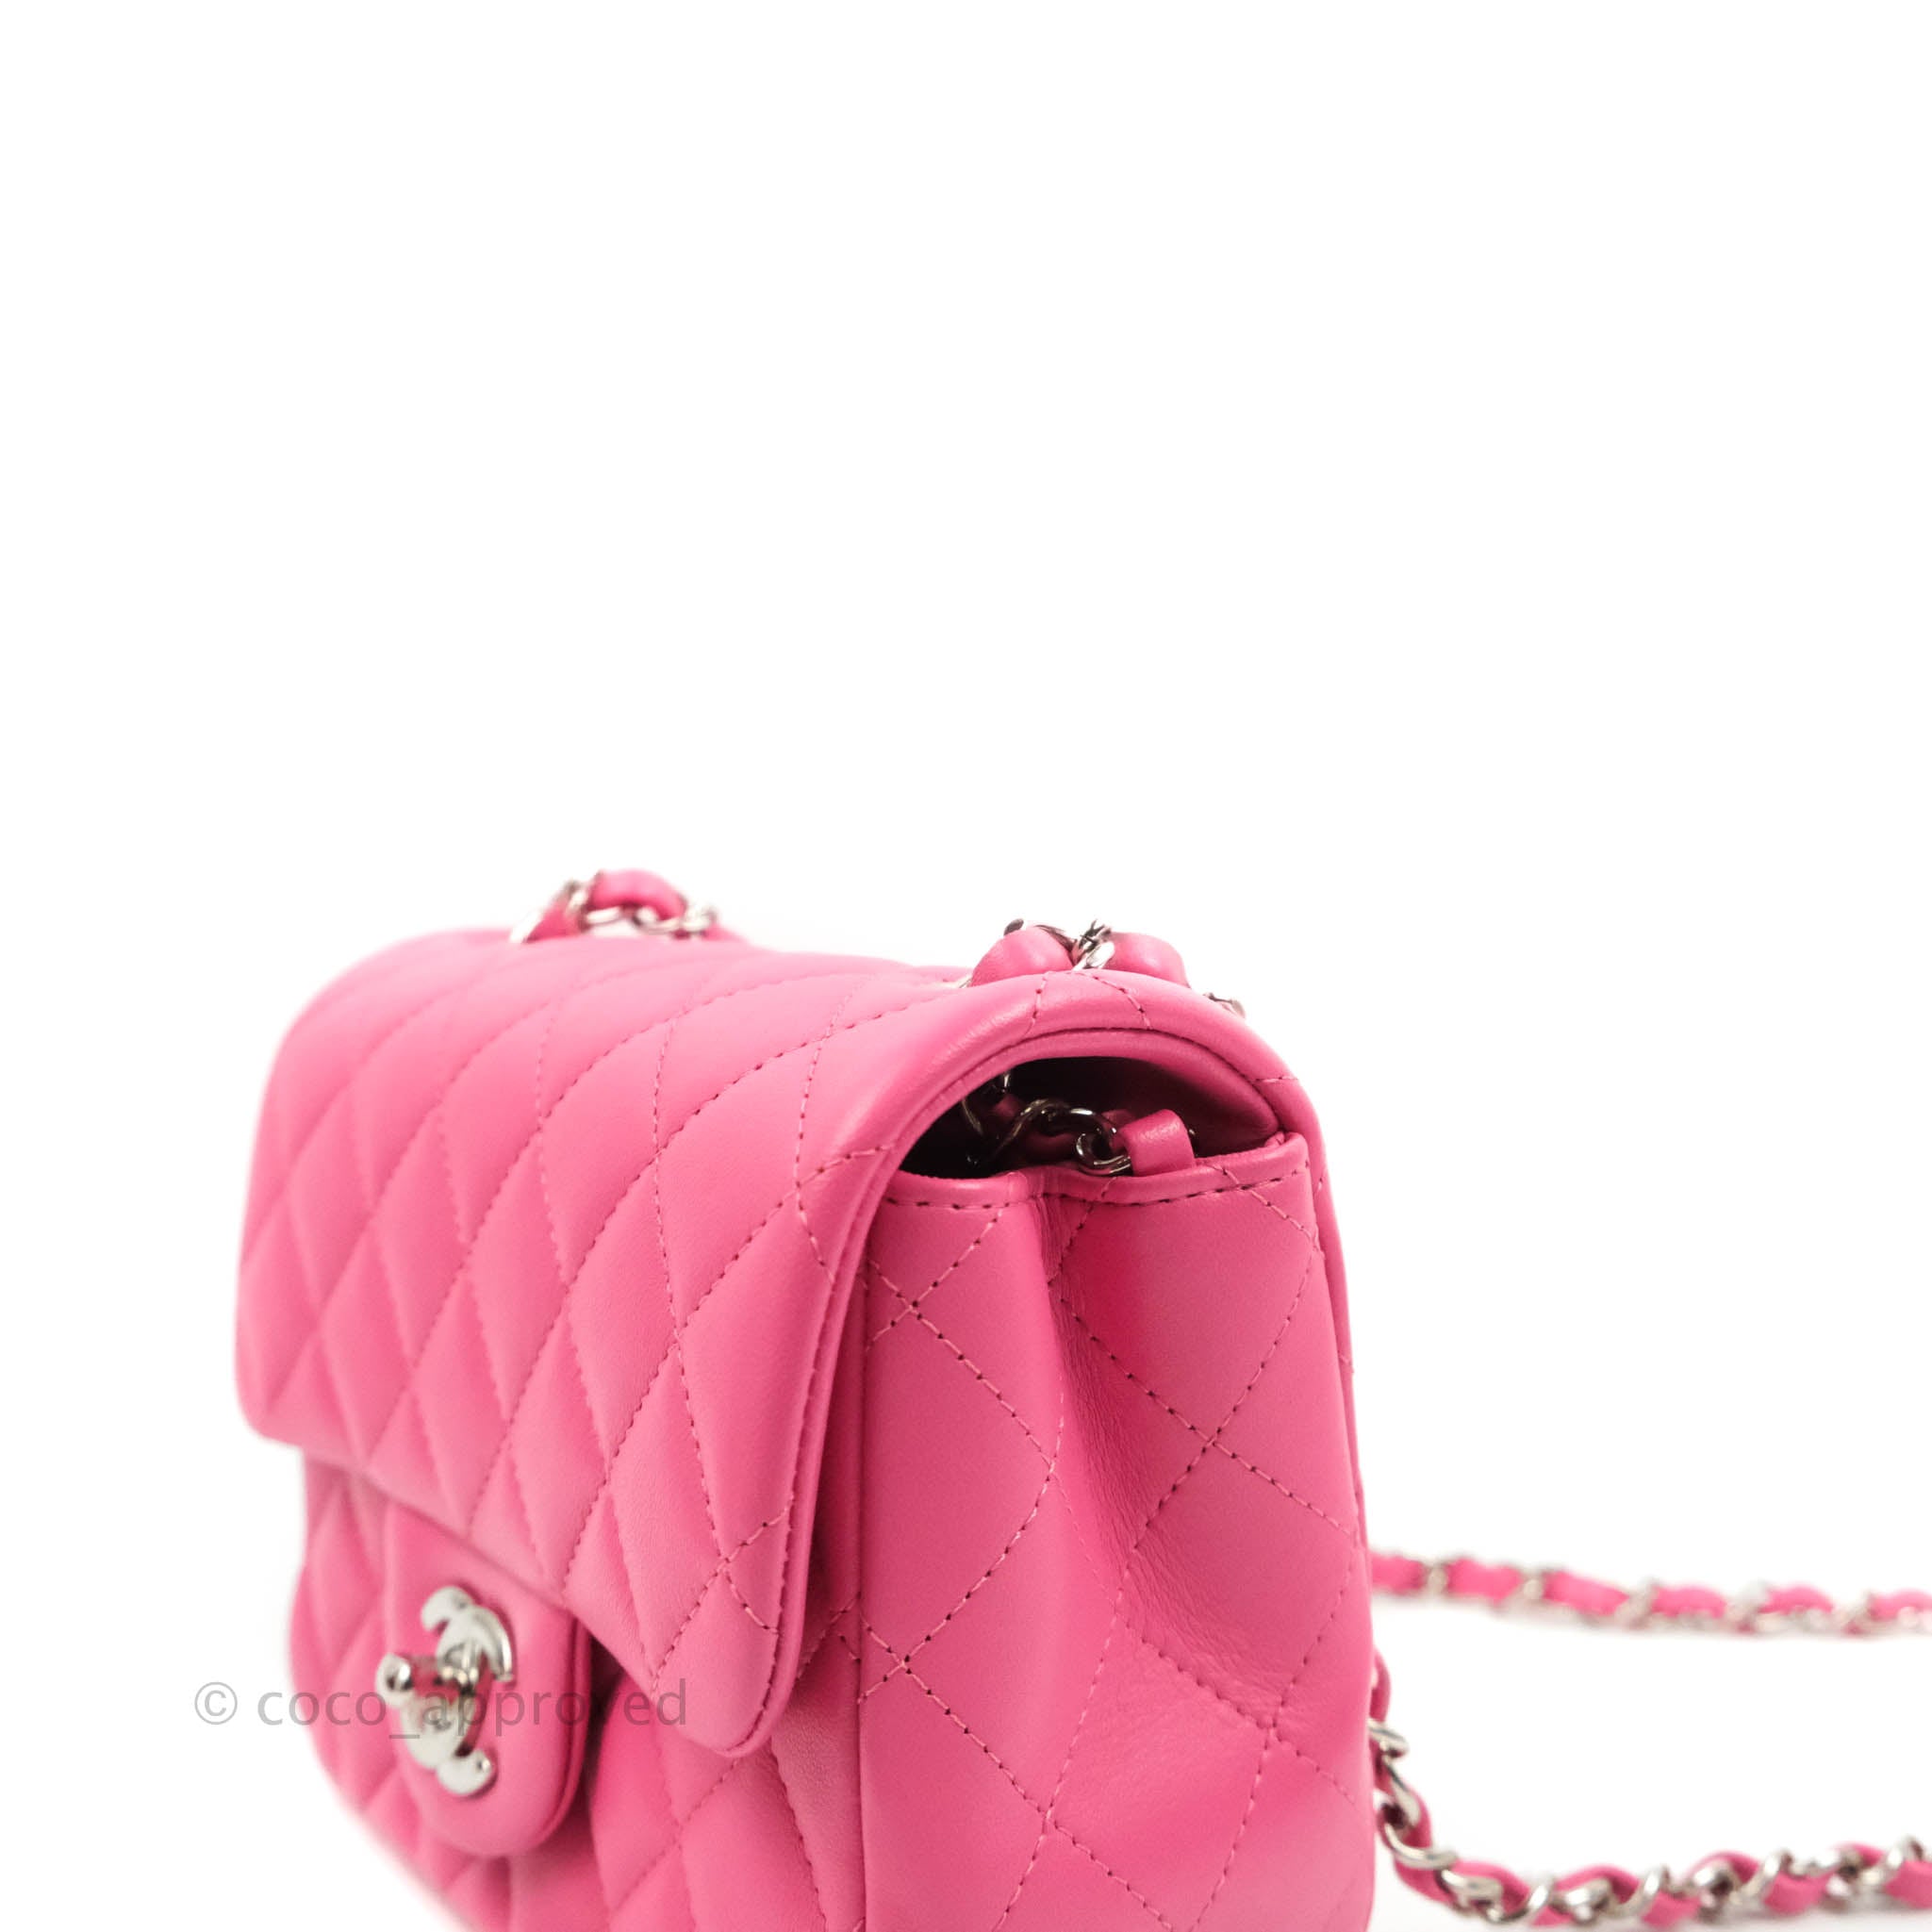 chanel bag with adjustable chain